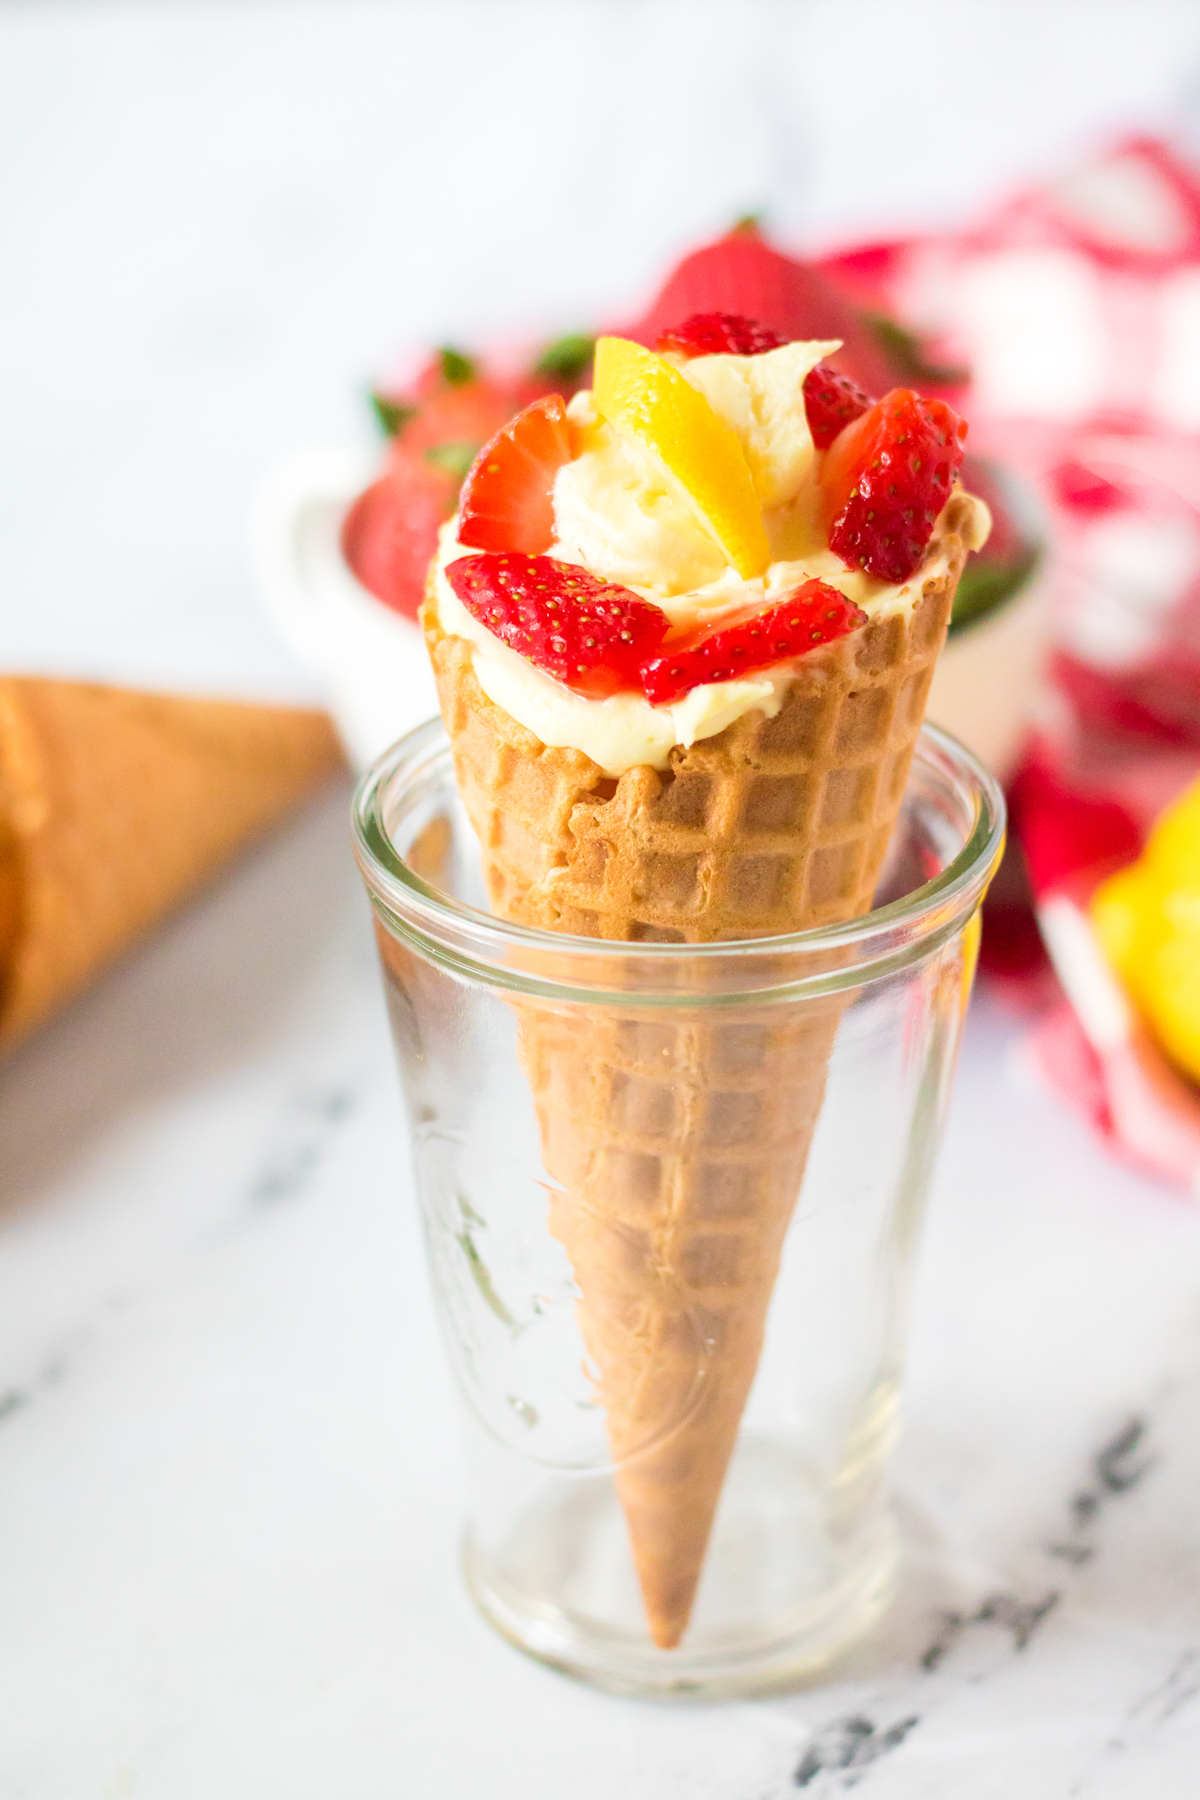 strawberry cheesecake cone in a glass